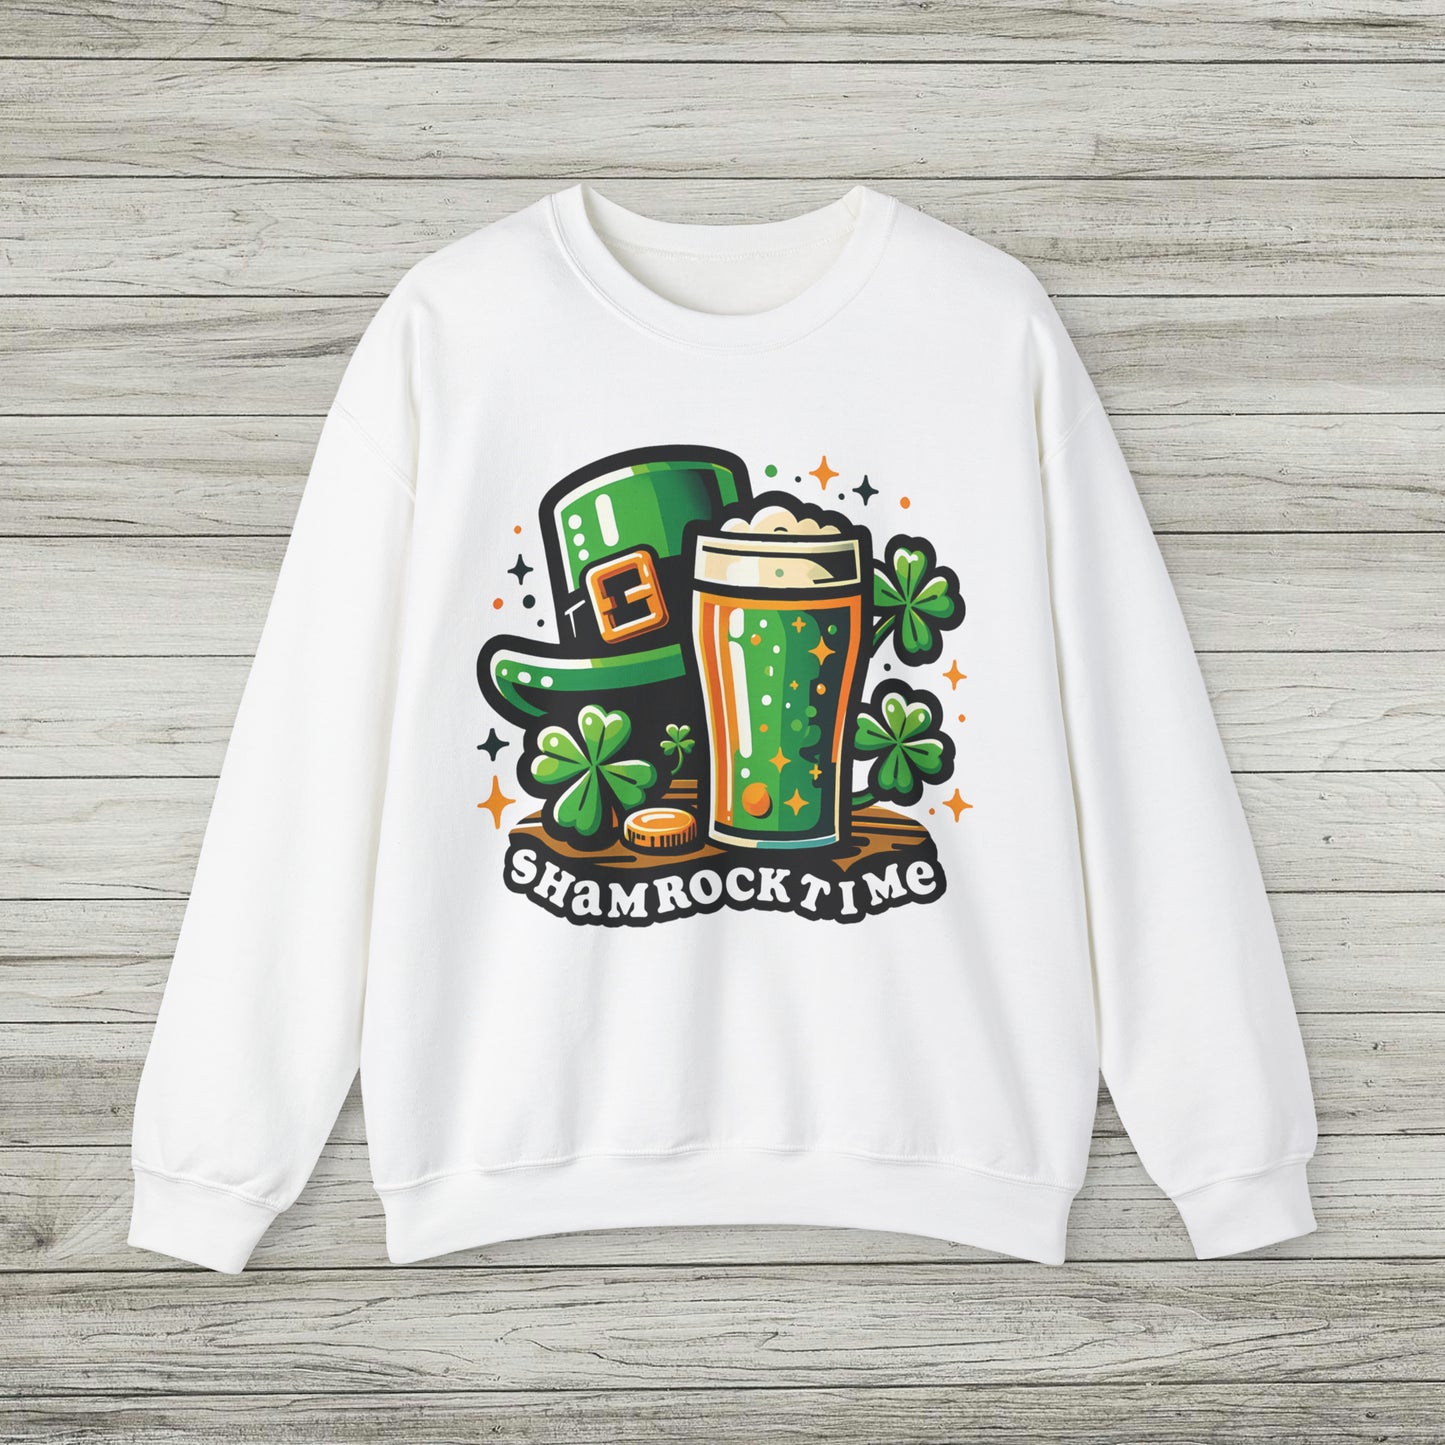 Shamrock Time Sweatshirt, St. Patrick's Day Crewneck, Funny Lucky Beer Drinking Shirt, Good Craic